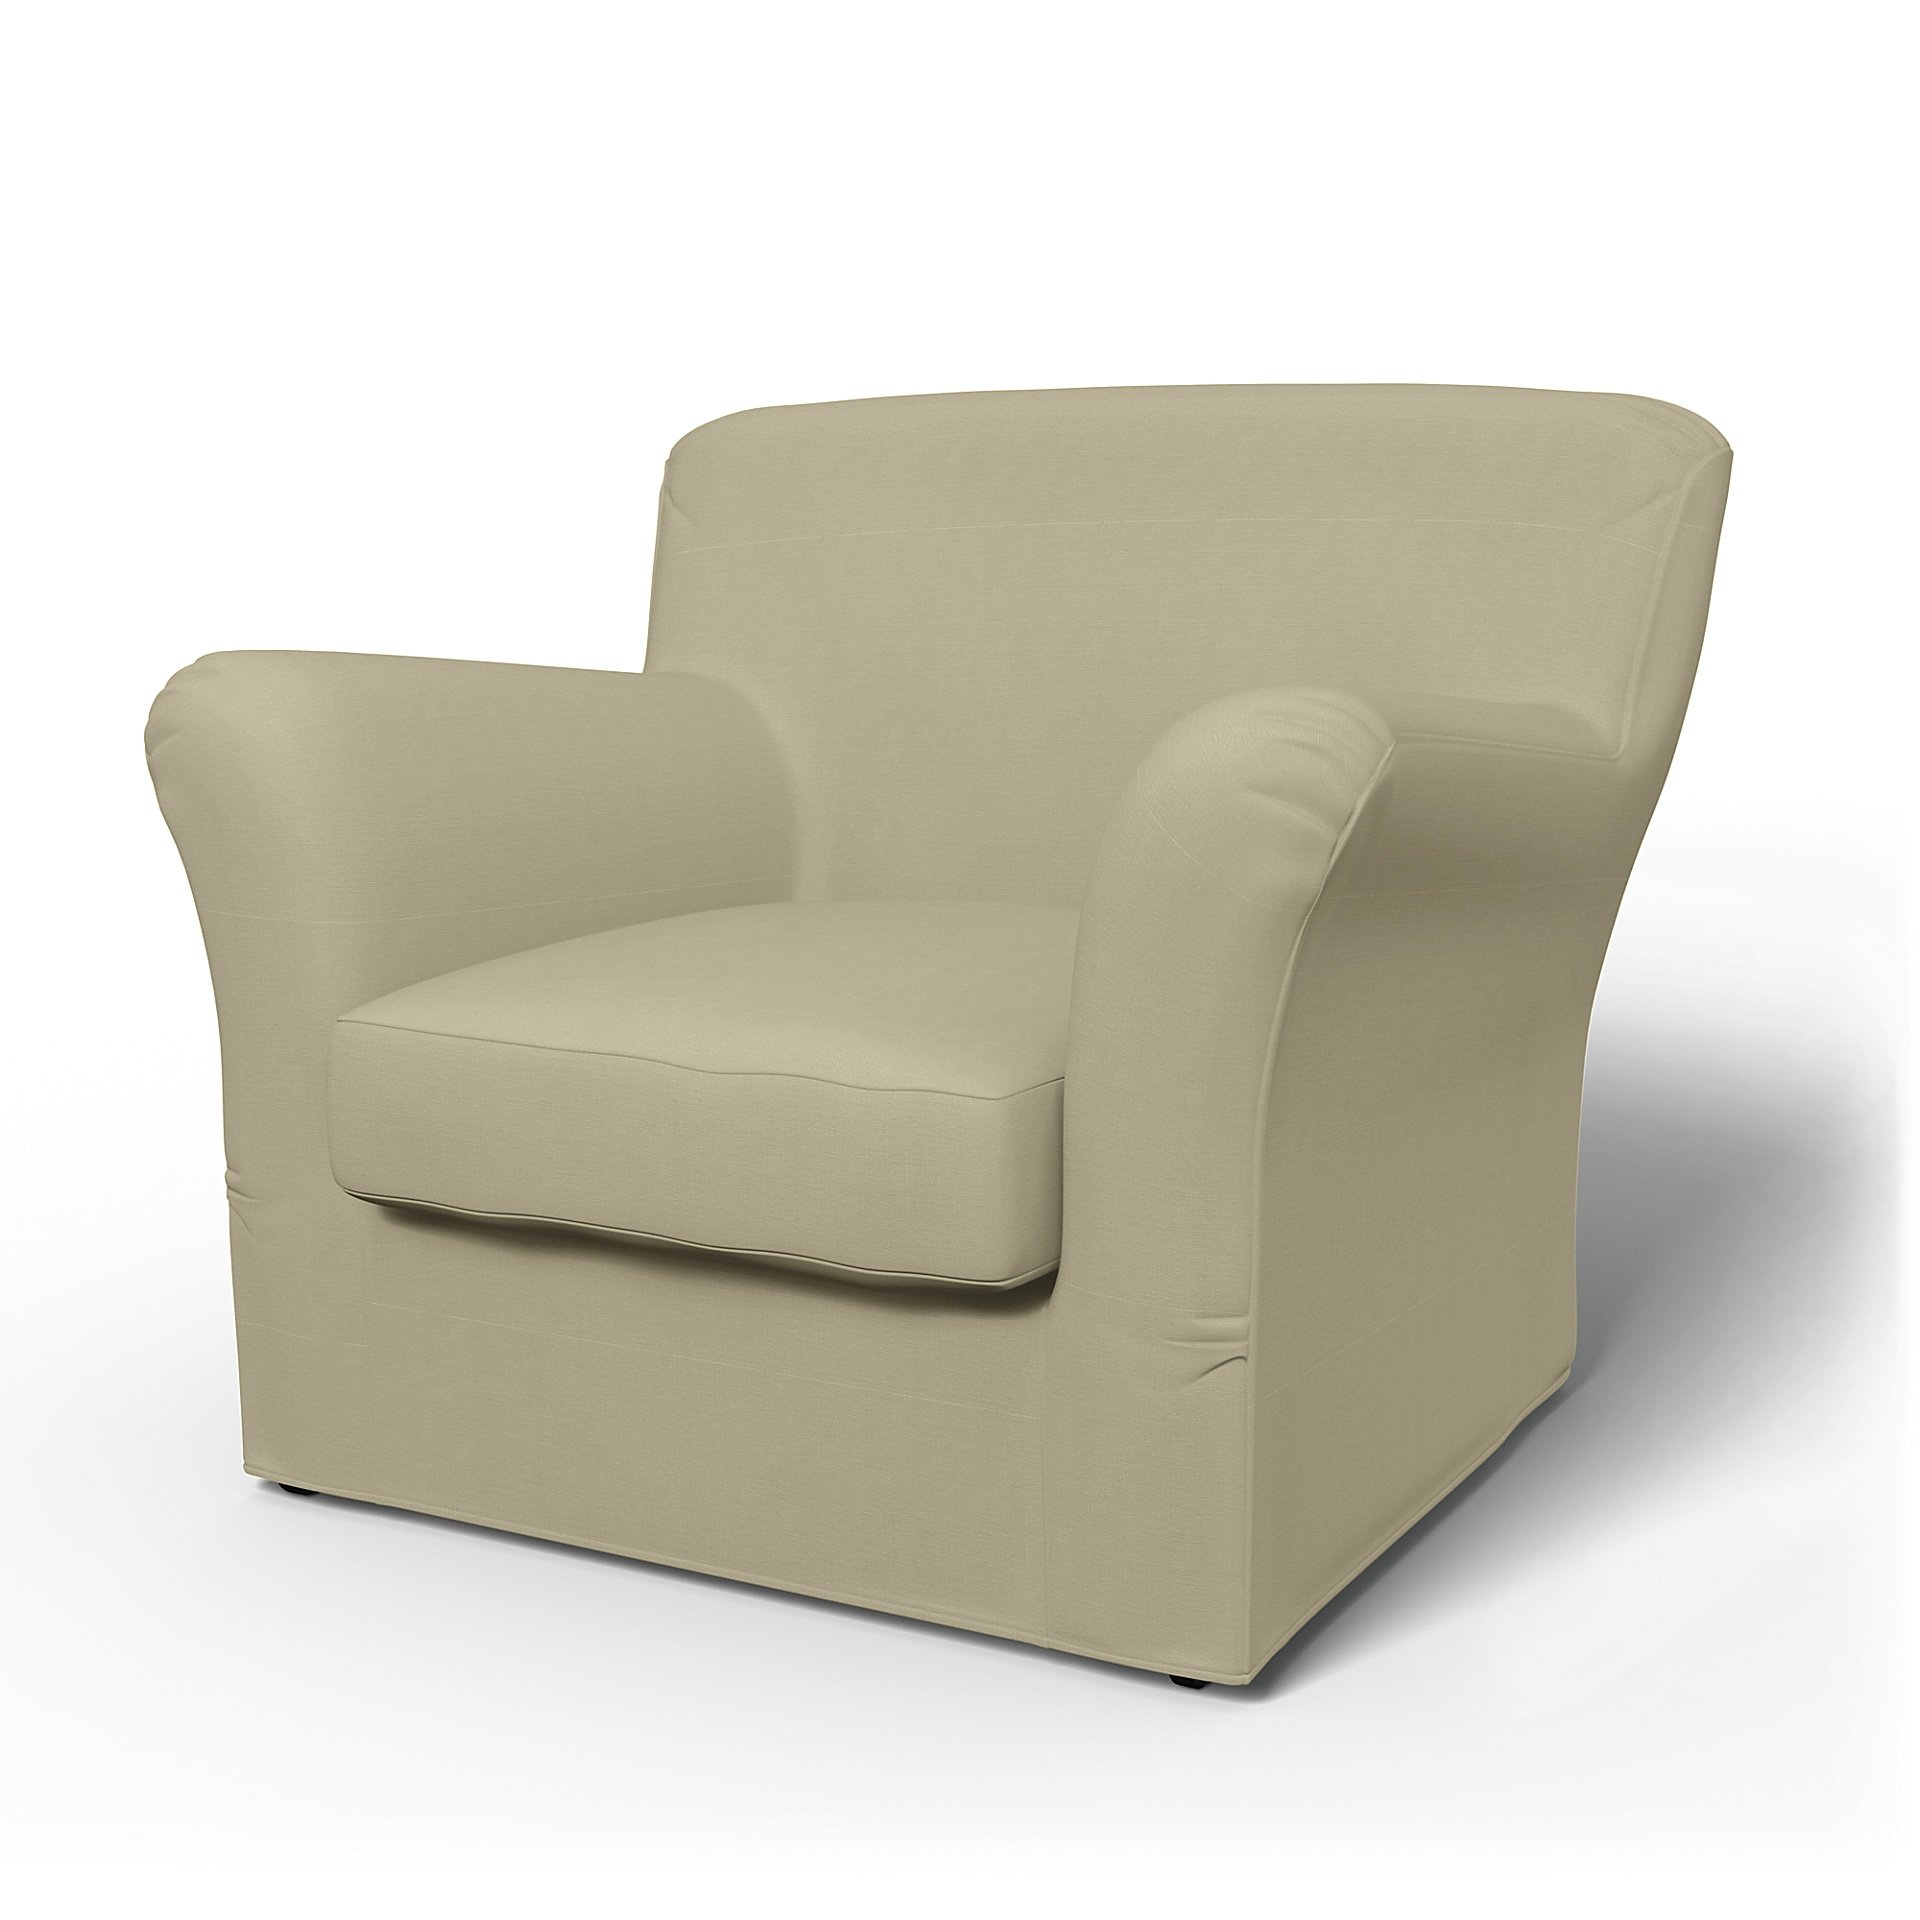 IKEA - Tomelilla Low Back Armchair Cover (Standard model), Sand Beige, Cotton - Bemz